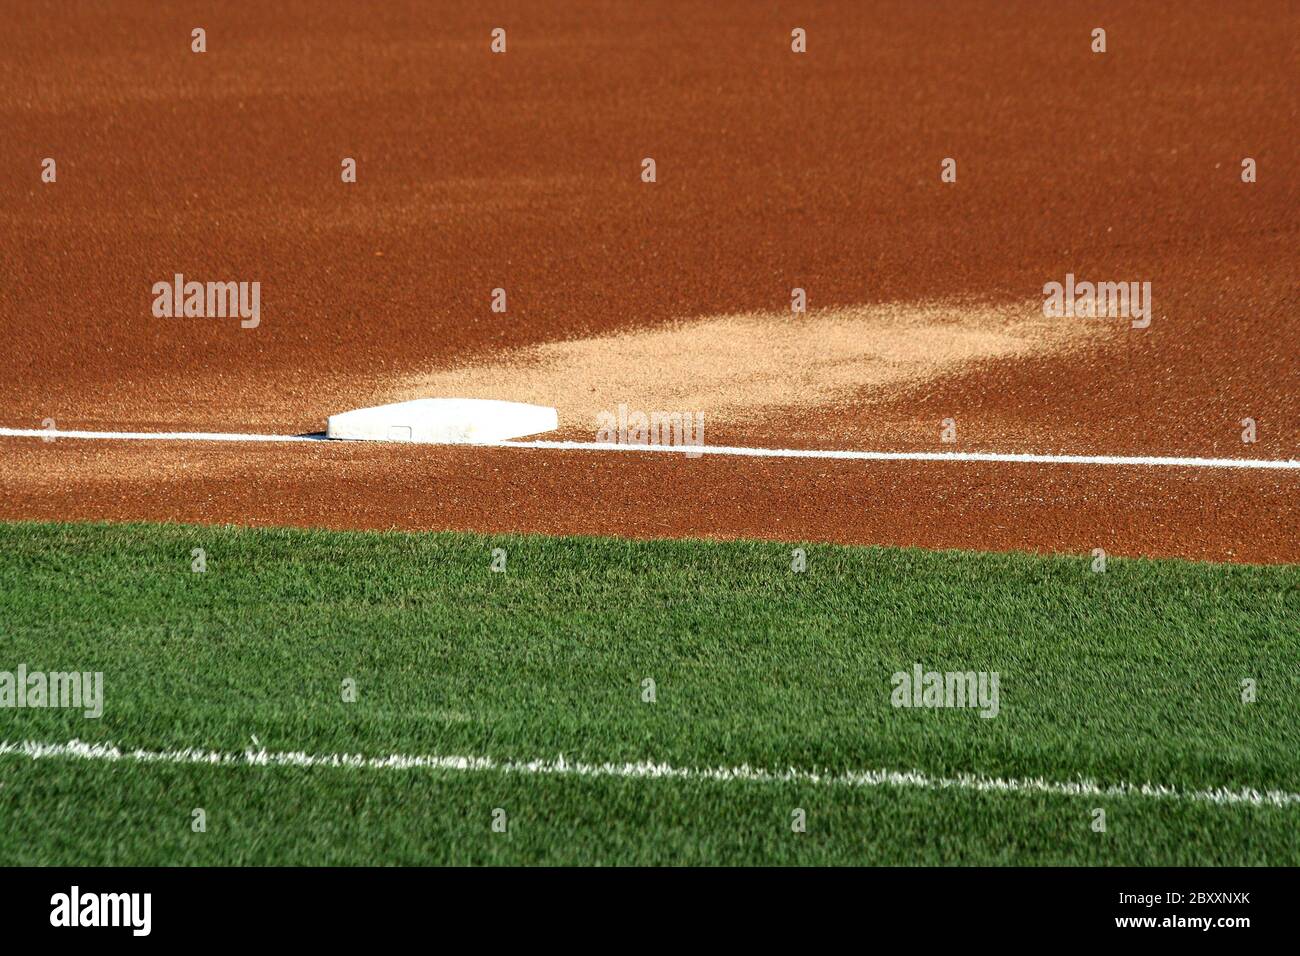 Third base on a baseball field Stock Photo